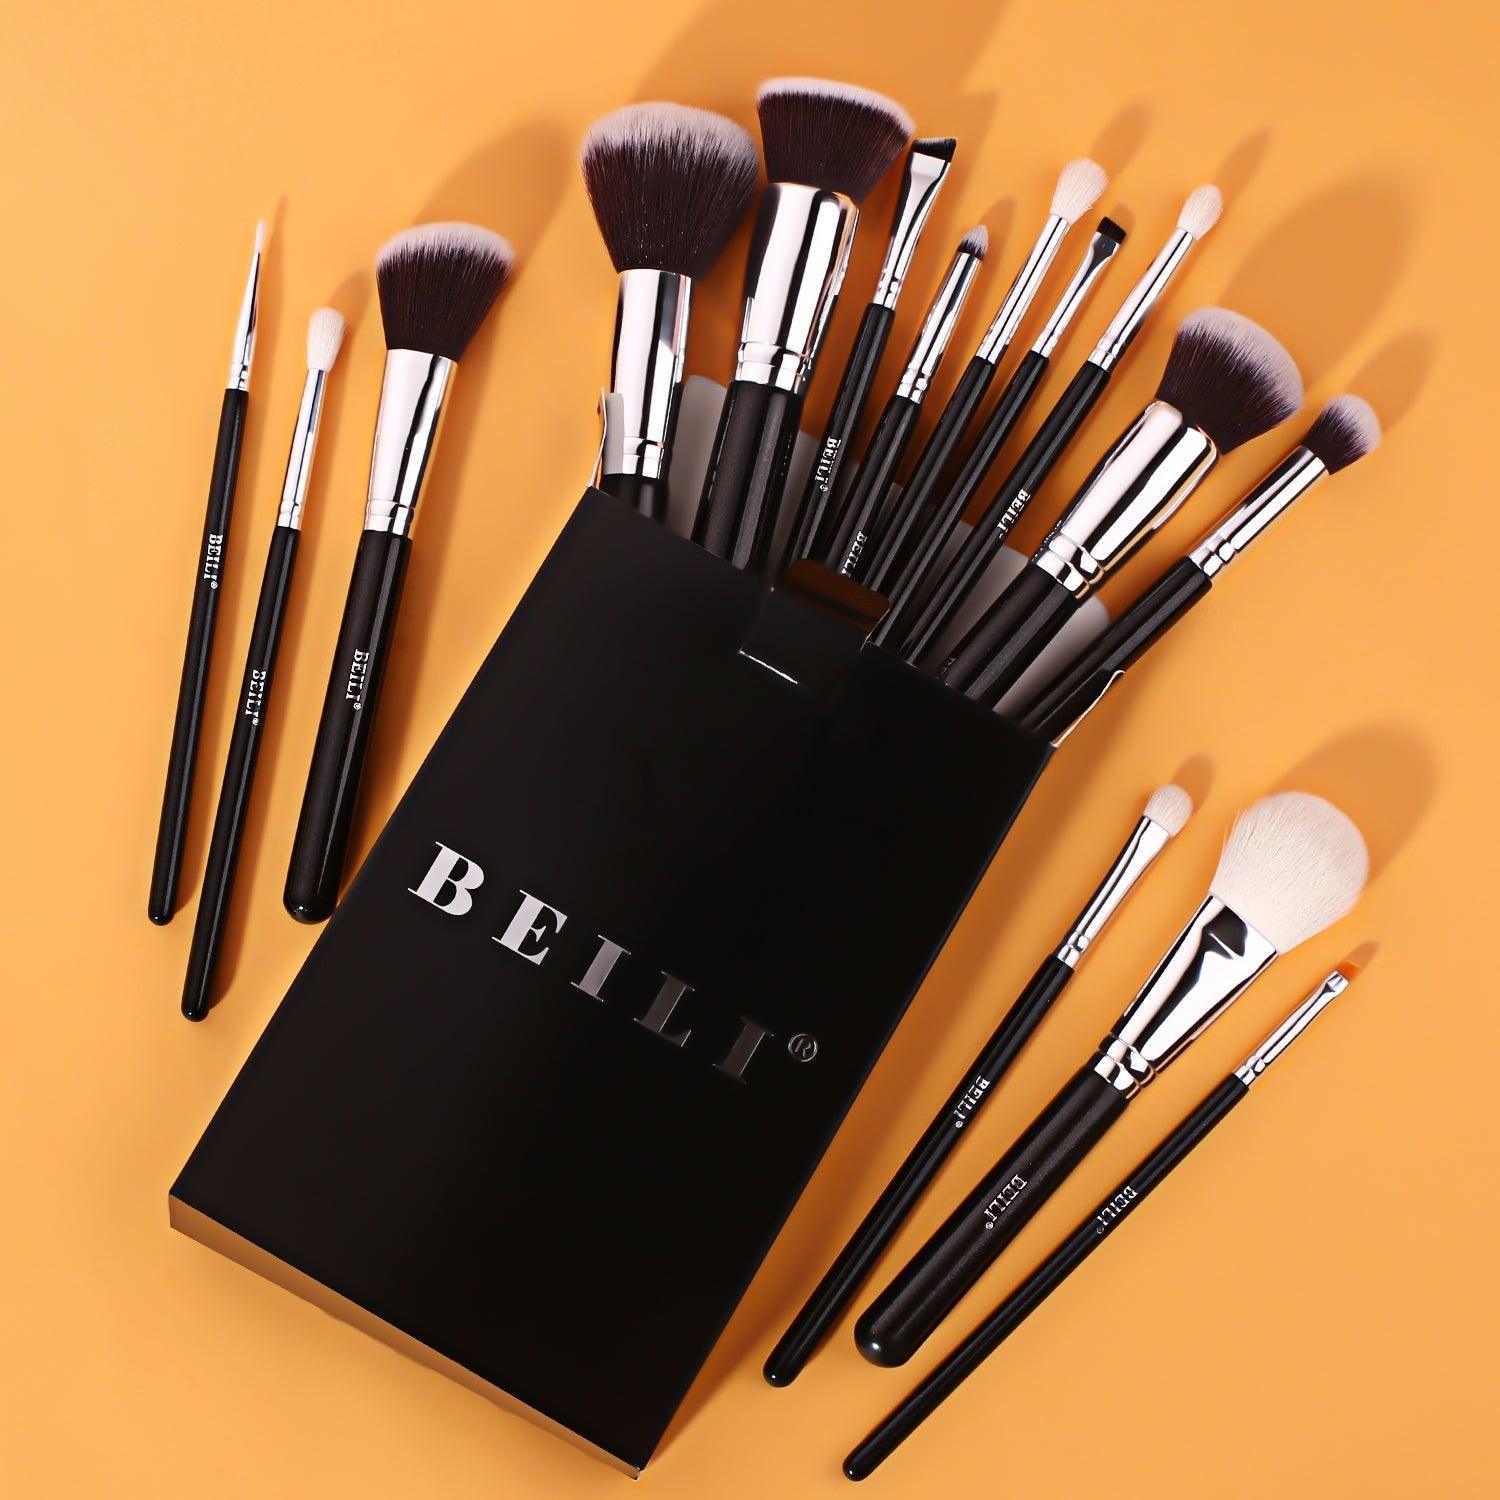 BEILI 15Pcs Individual Makeup Brush Set BN15 - BEILI Official Shop